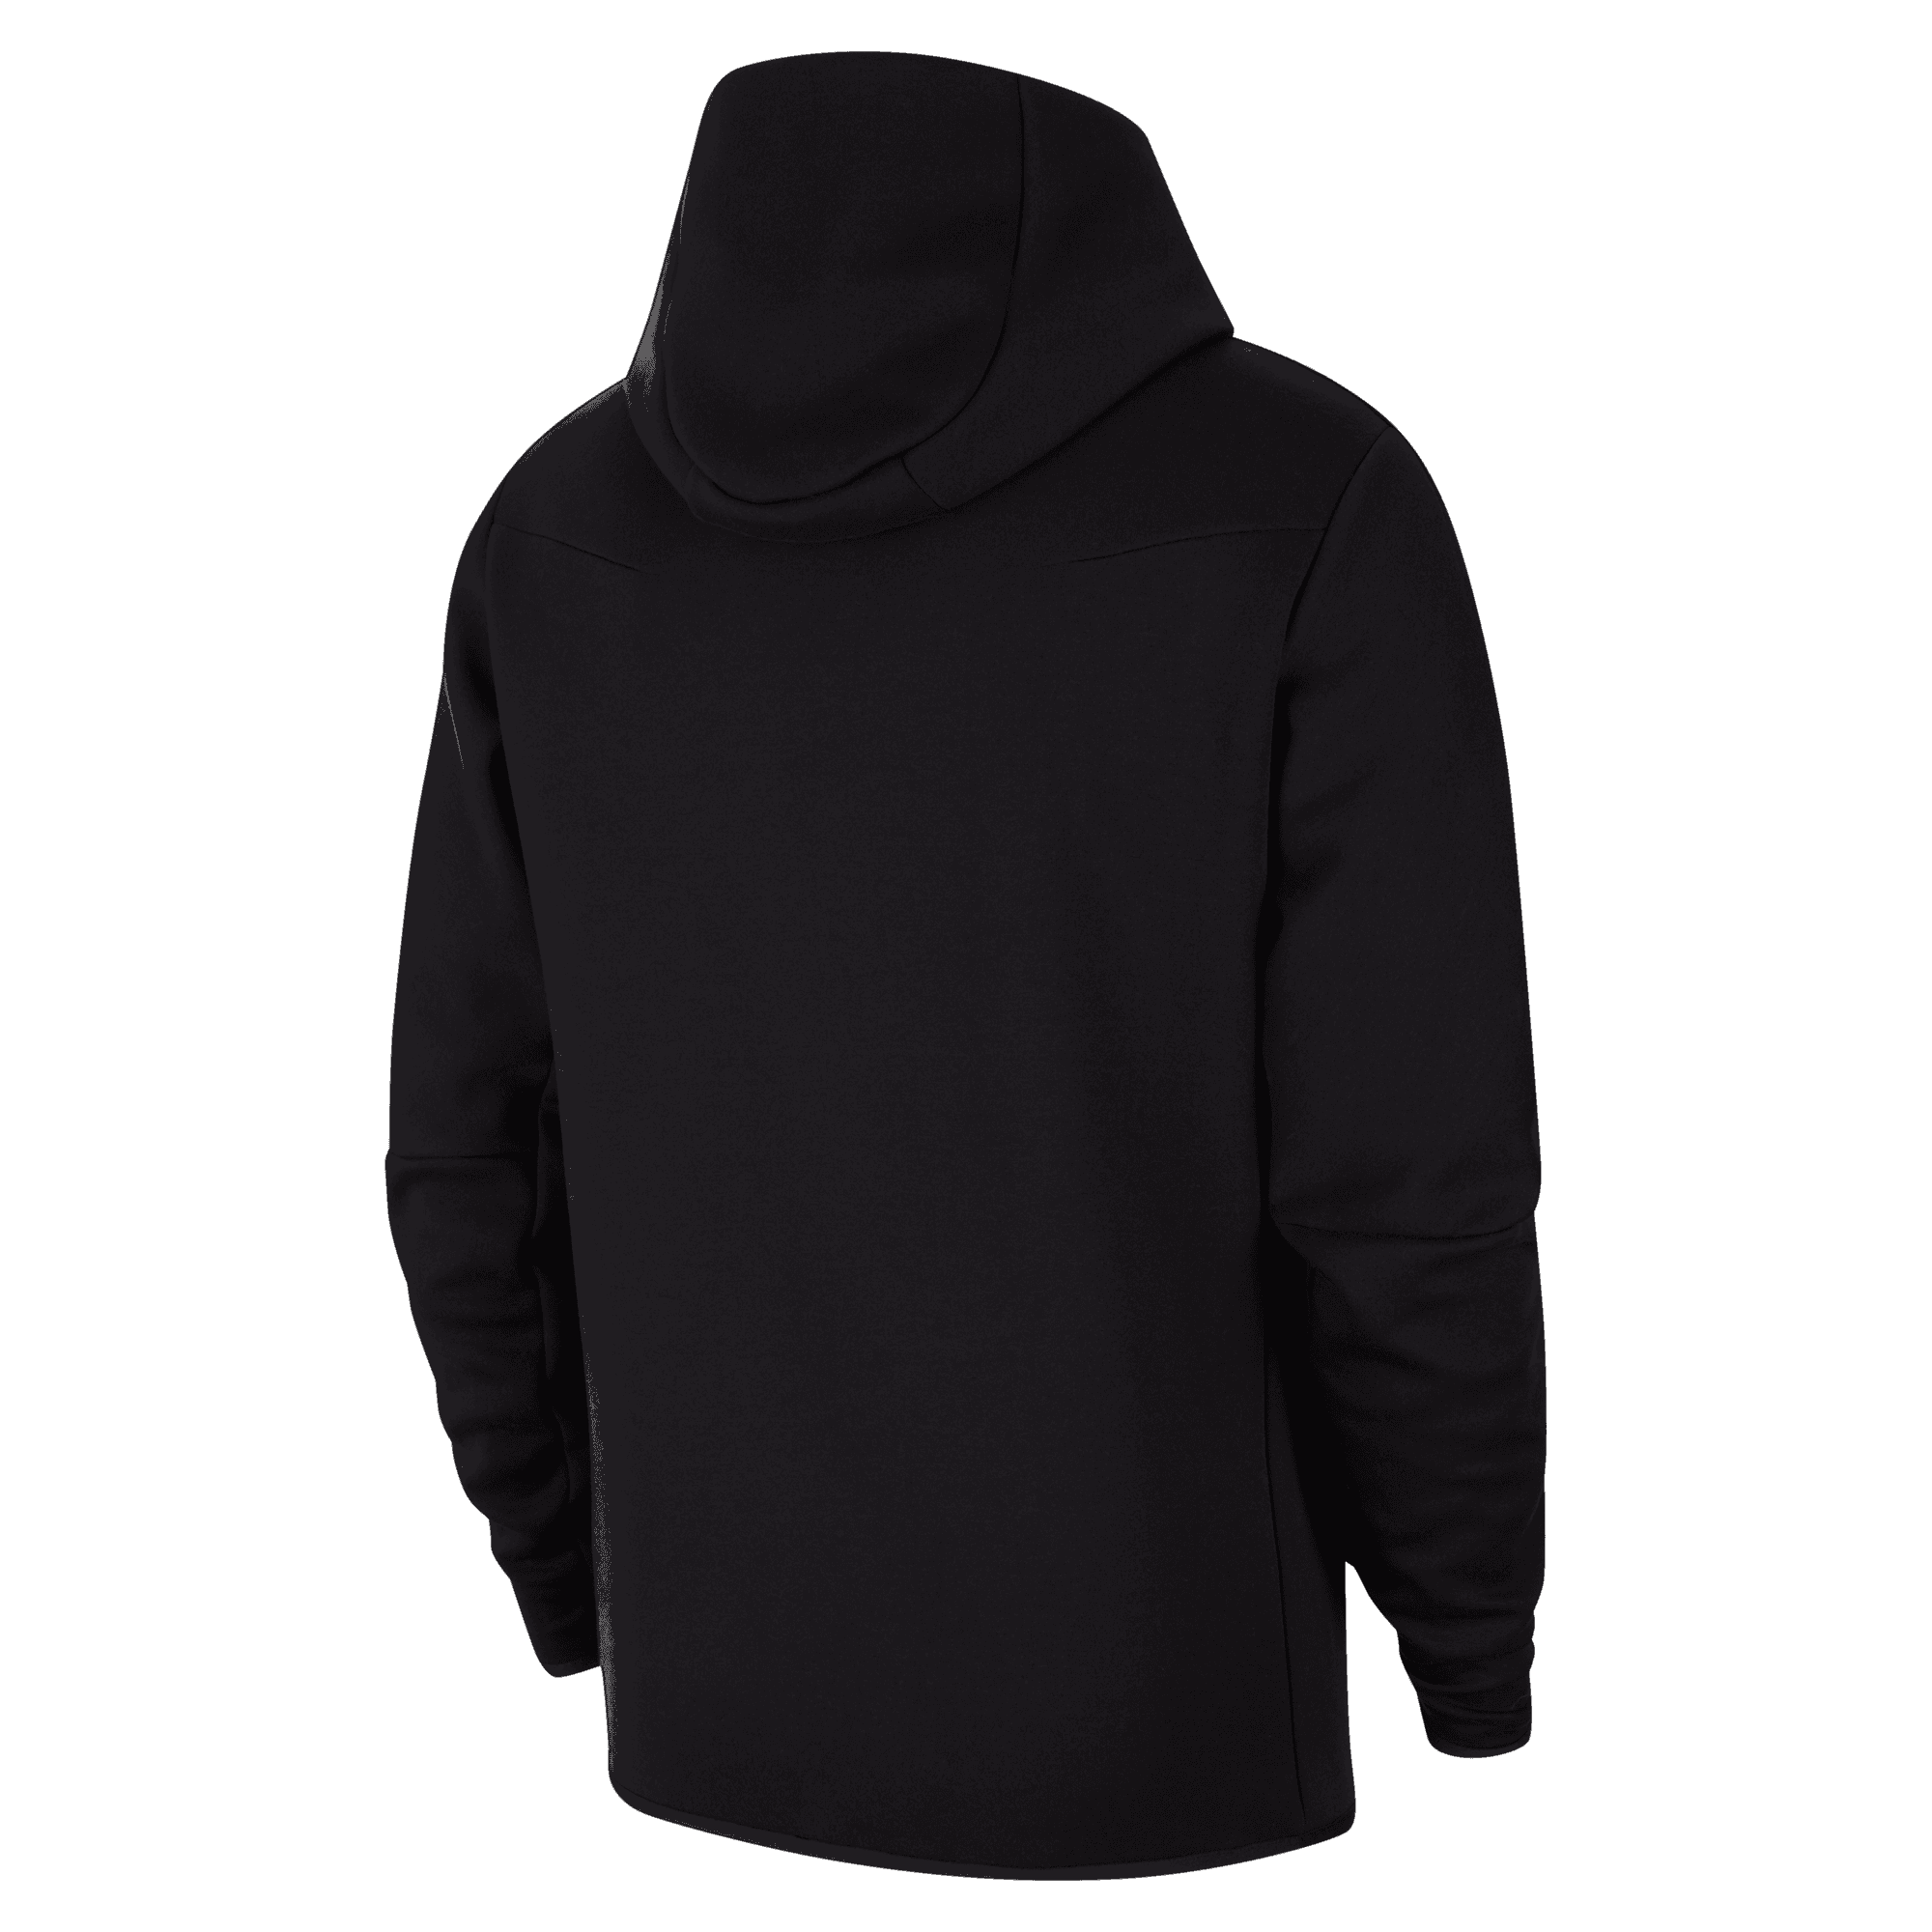 Shop Nike Tech Fleece Full-Zip Hoodie CU4489-010 black